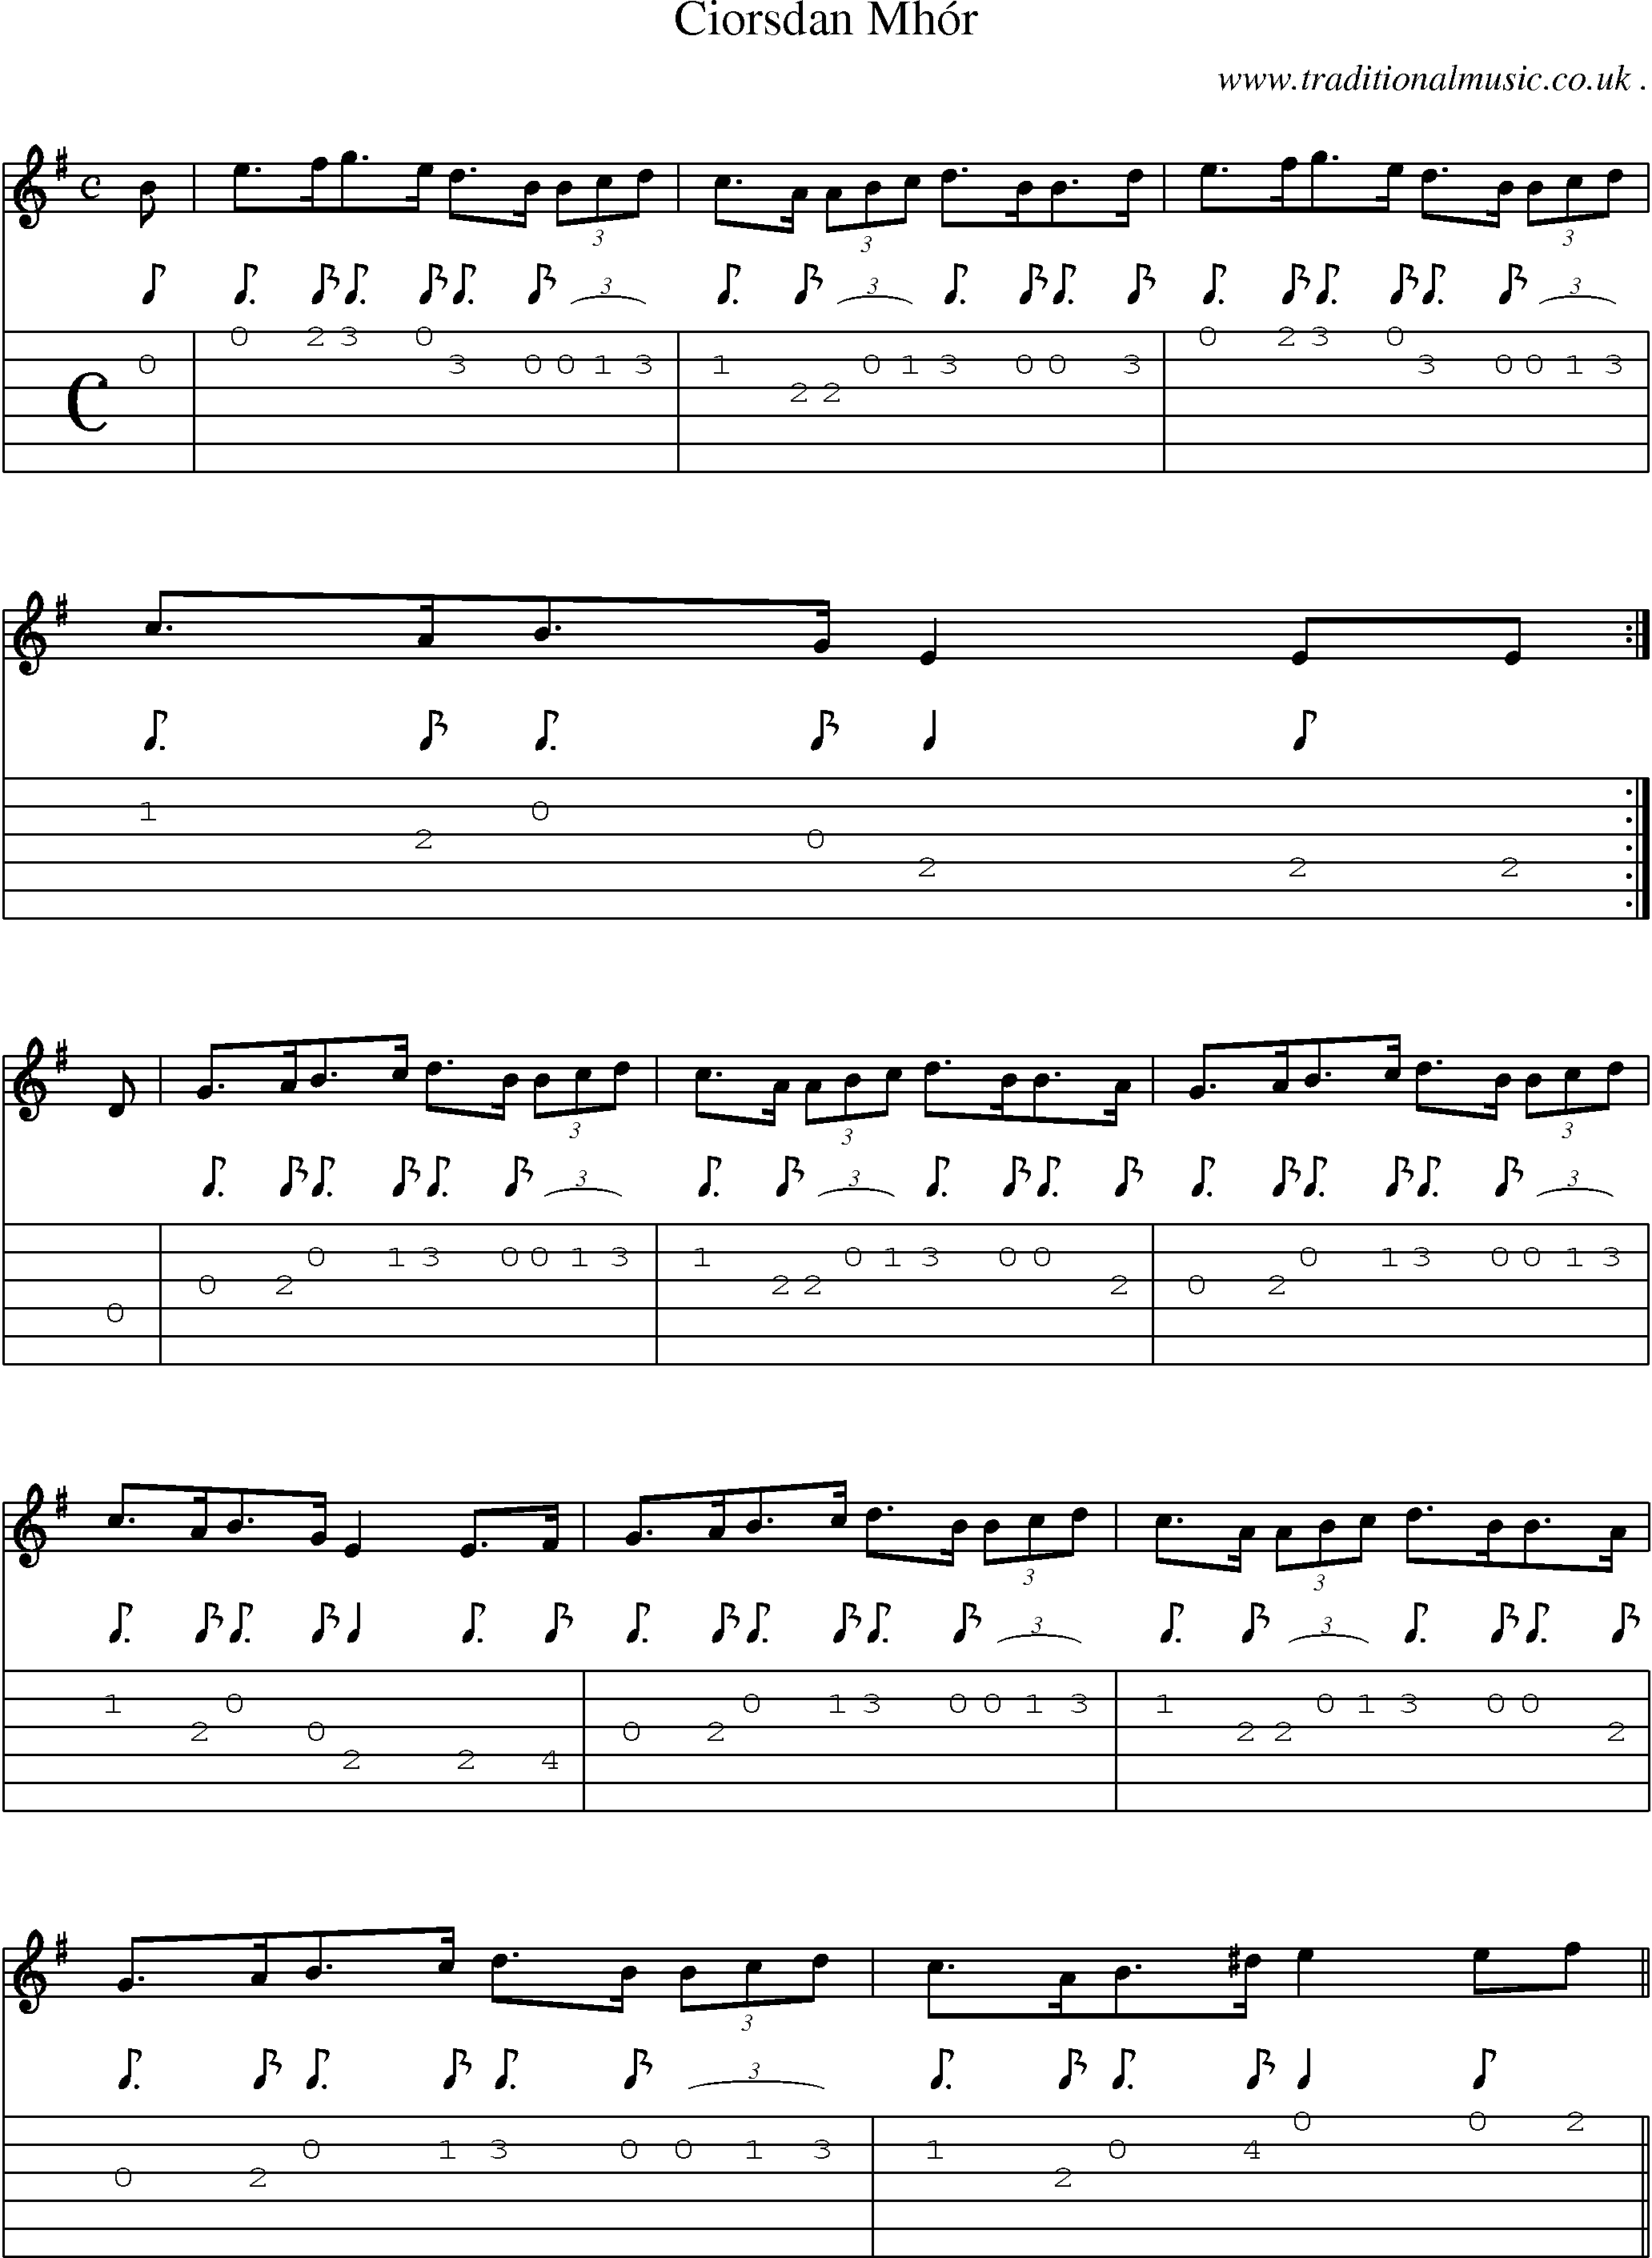 Sheet-music  score, Chords and Guitar Tabs for Ciorsdan Mhor